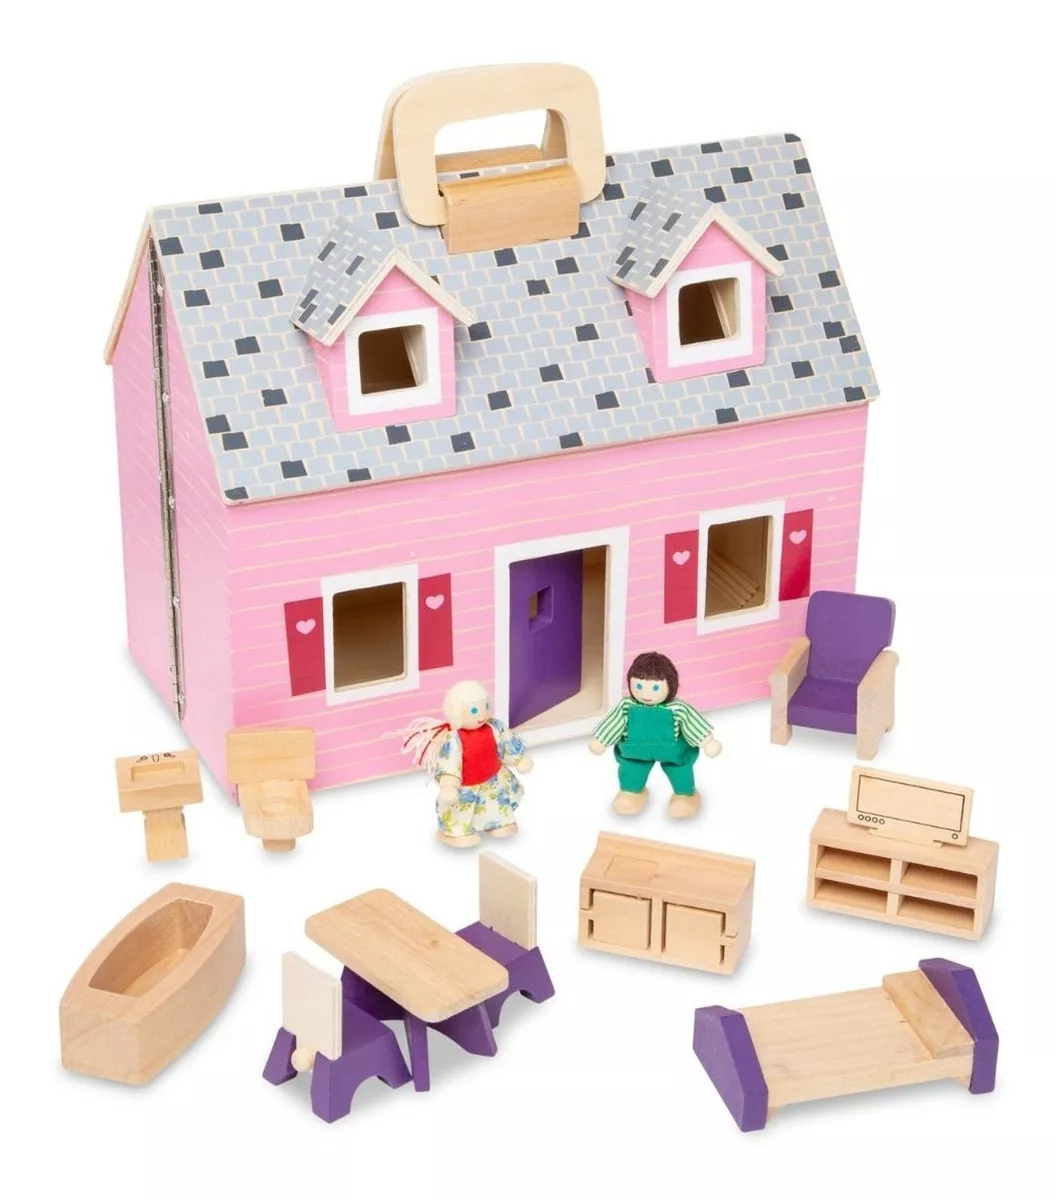 Tercera imagen para búsqueda de casa de muñecas de madera